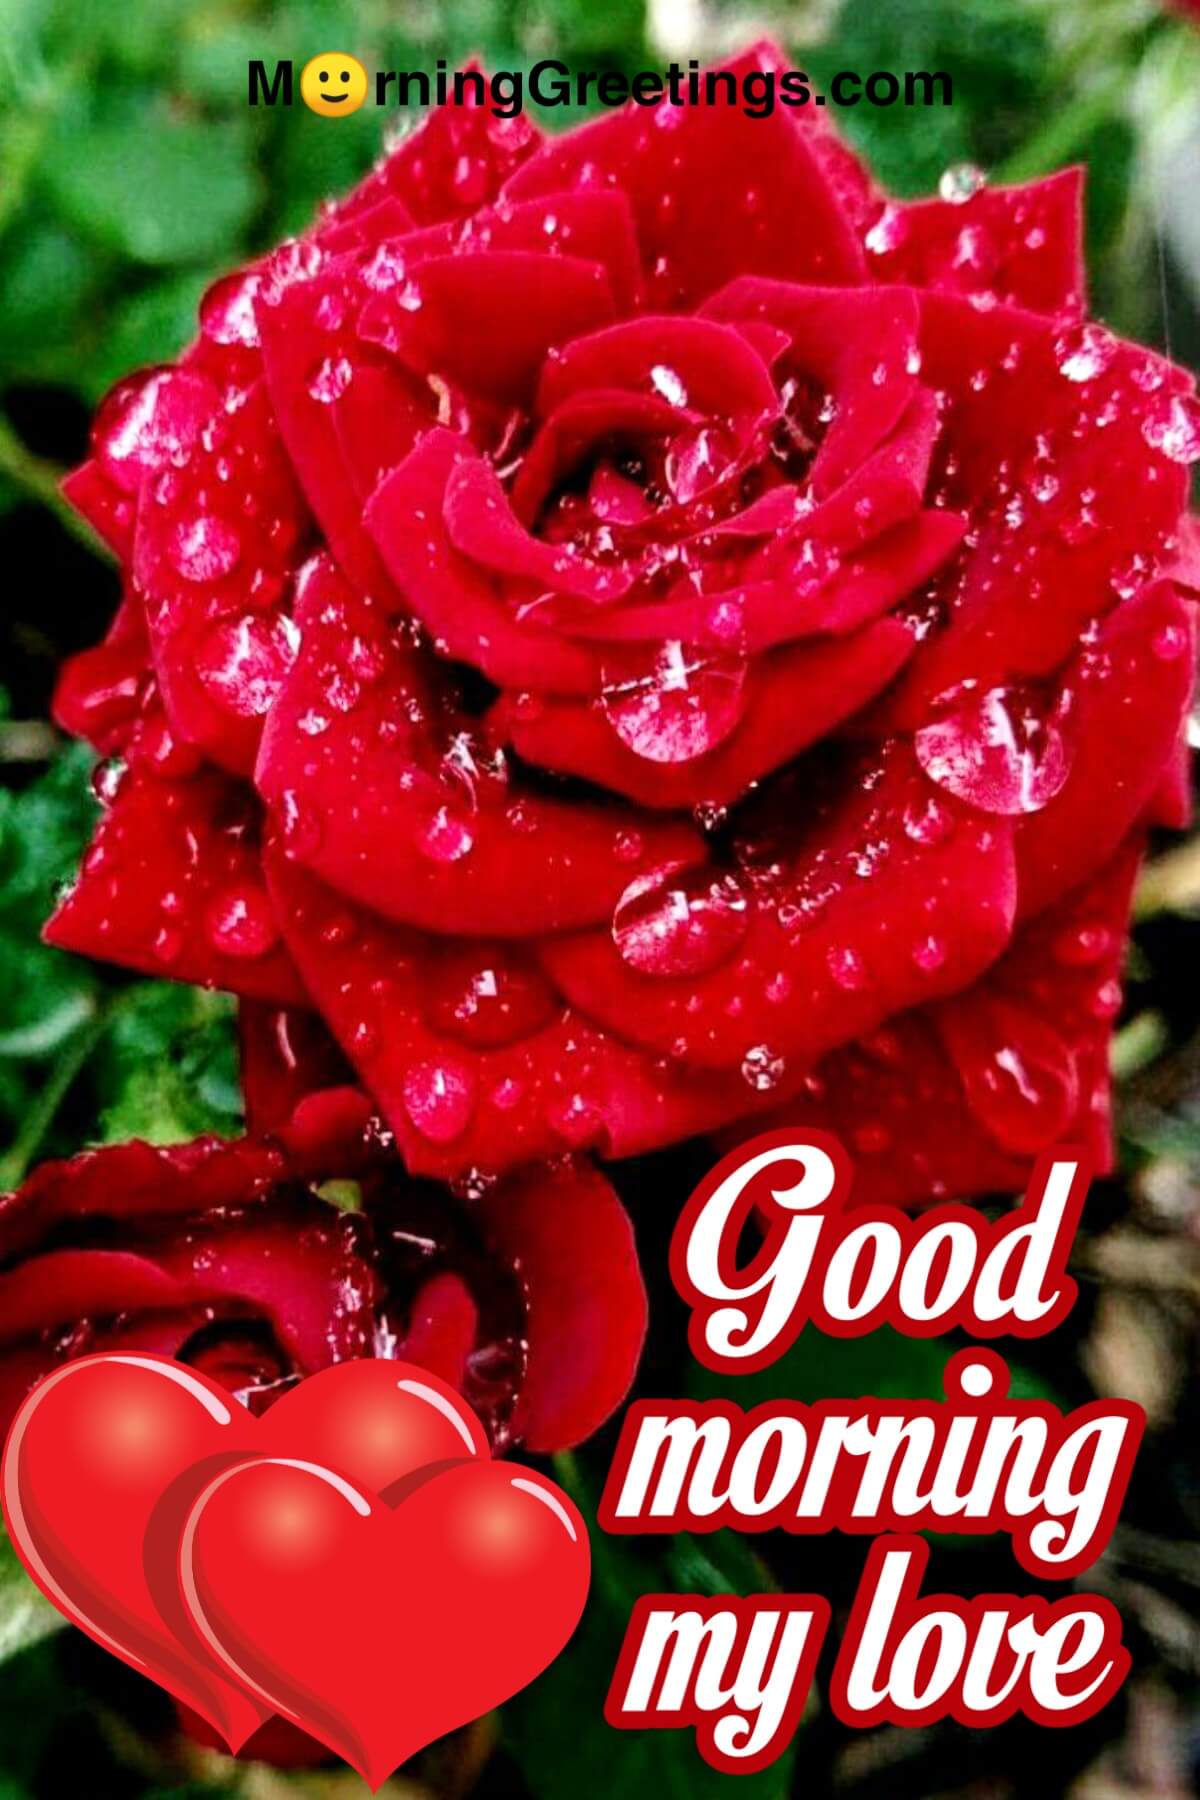 good morning beautiful rose